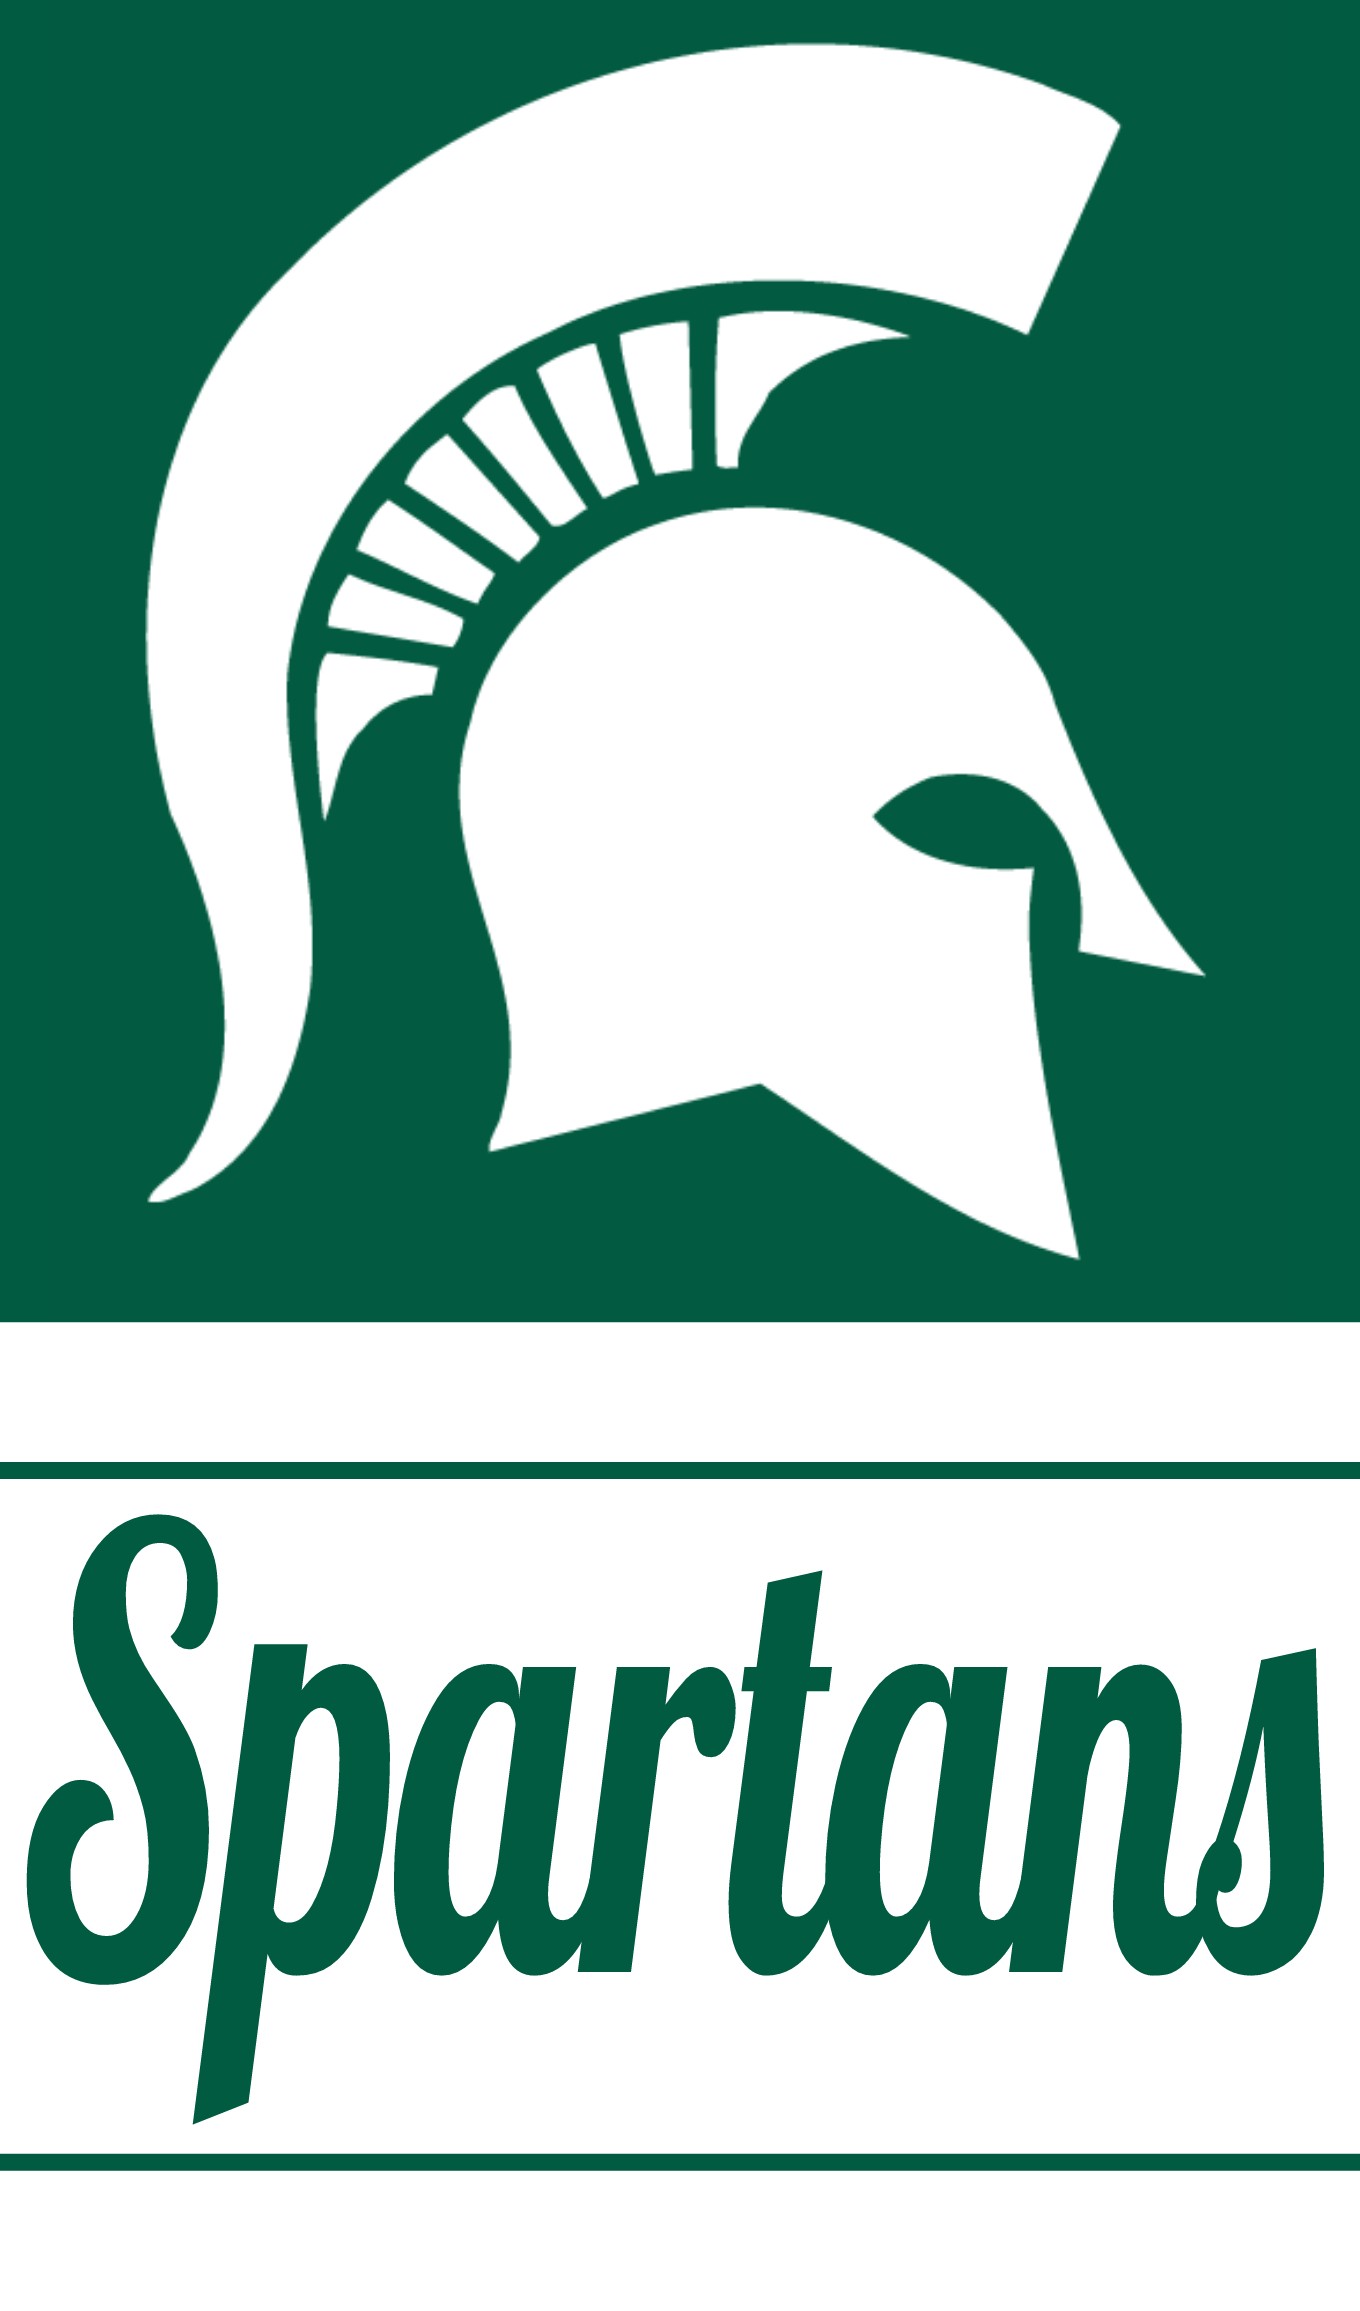 Michganstate Spartans Msu College Football Wallpaper